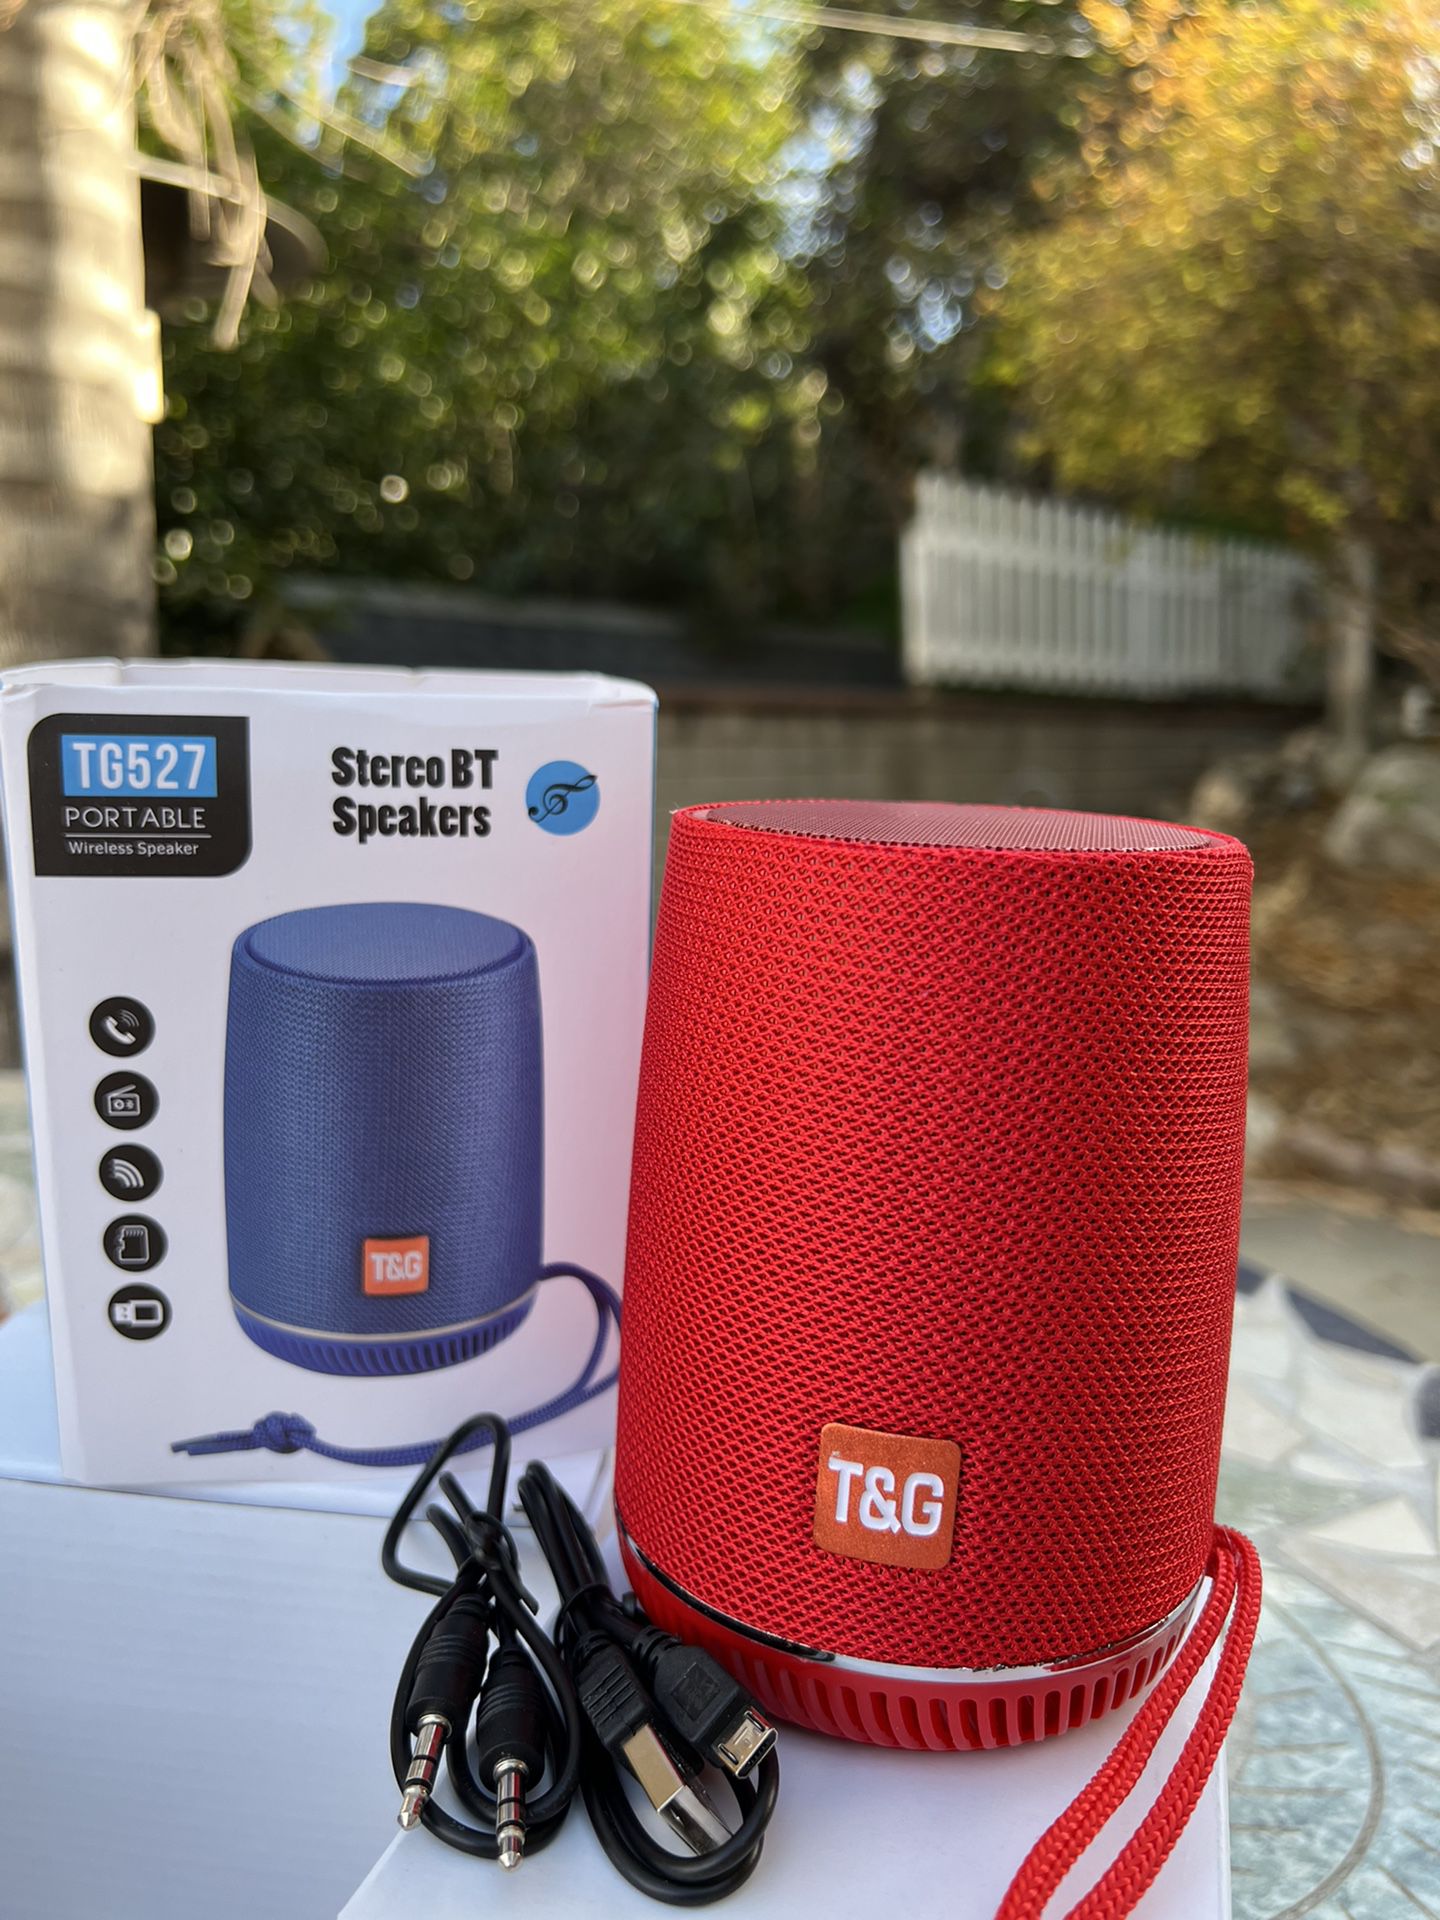 Mini Portable Bluetooth Speaker With Subwoofer Hi-Fi Stereo**Red**Radio Function**Mini Speaker